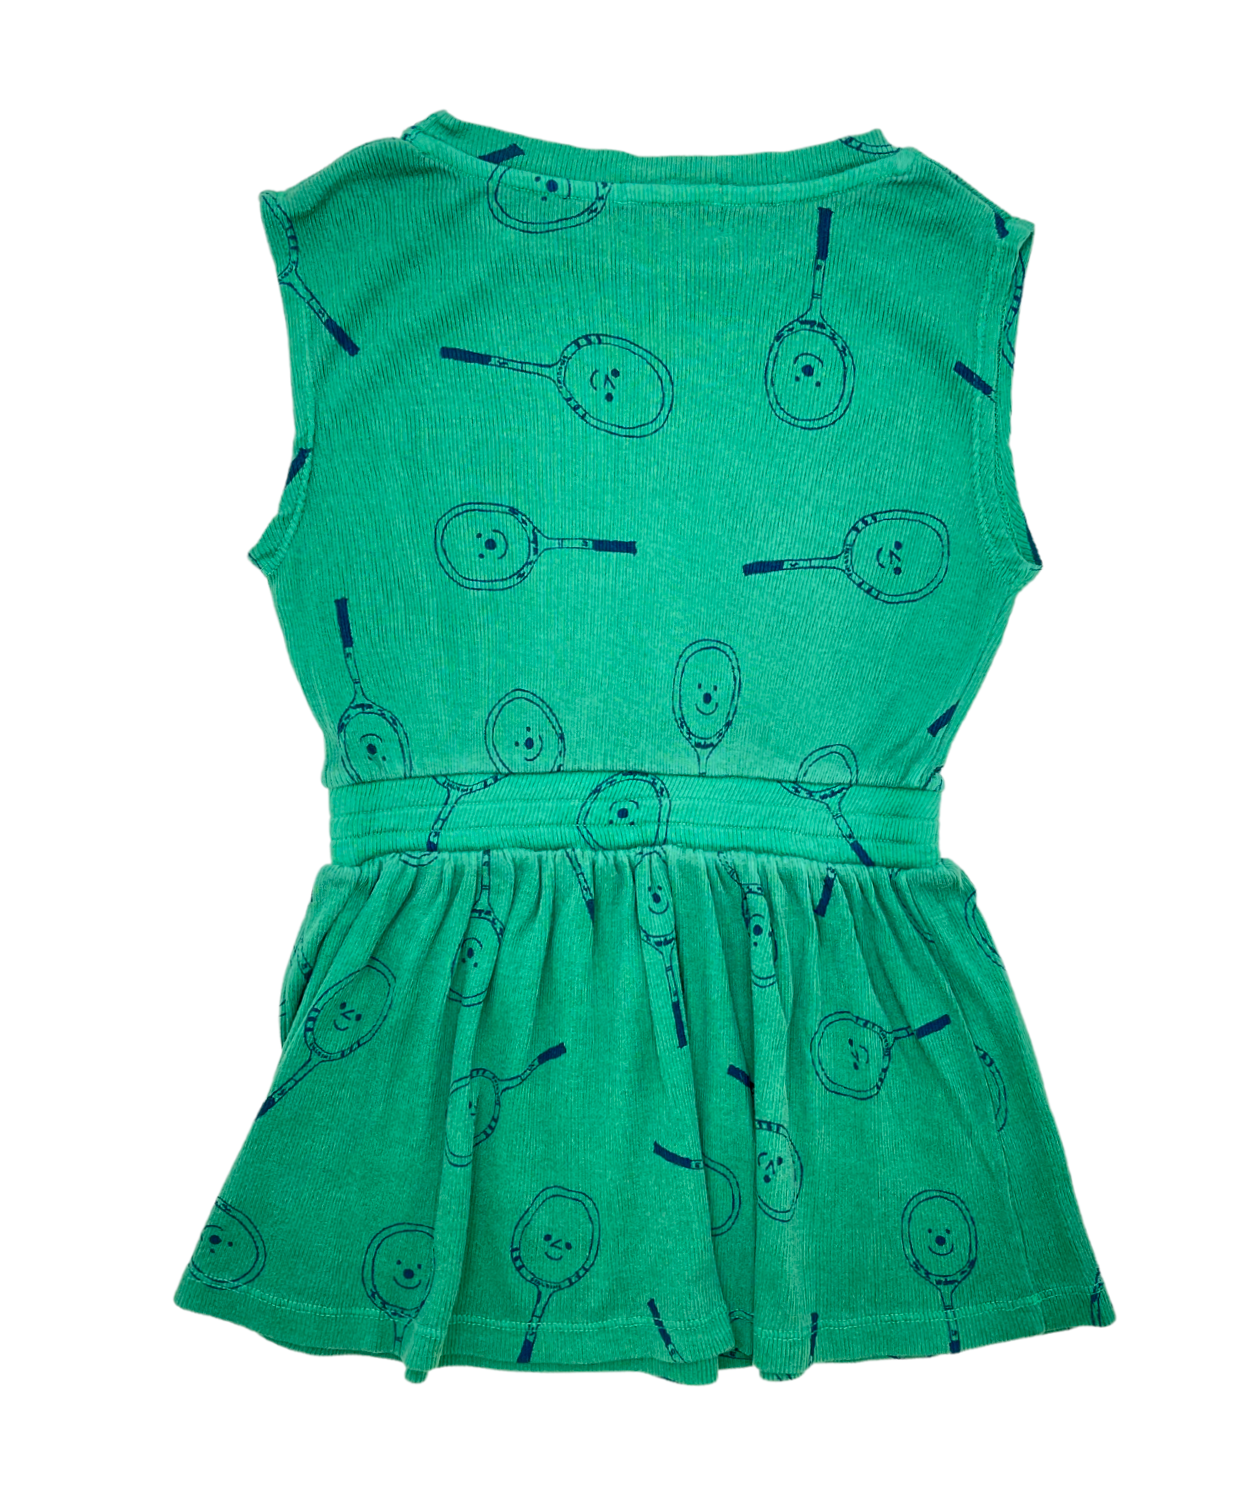 BOBO CHOSES - Green tennis dress in organic cotton - 2/3 years